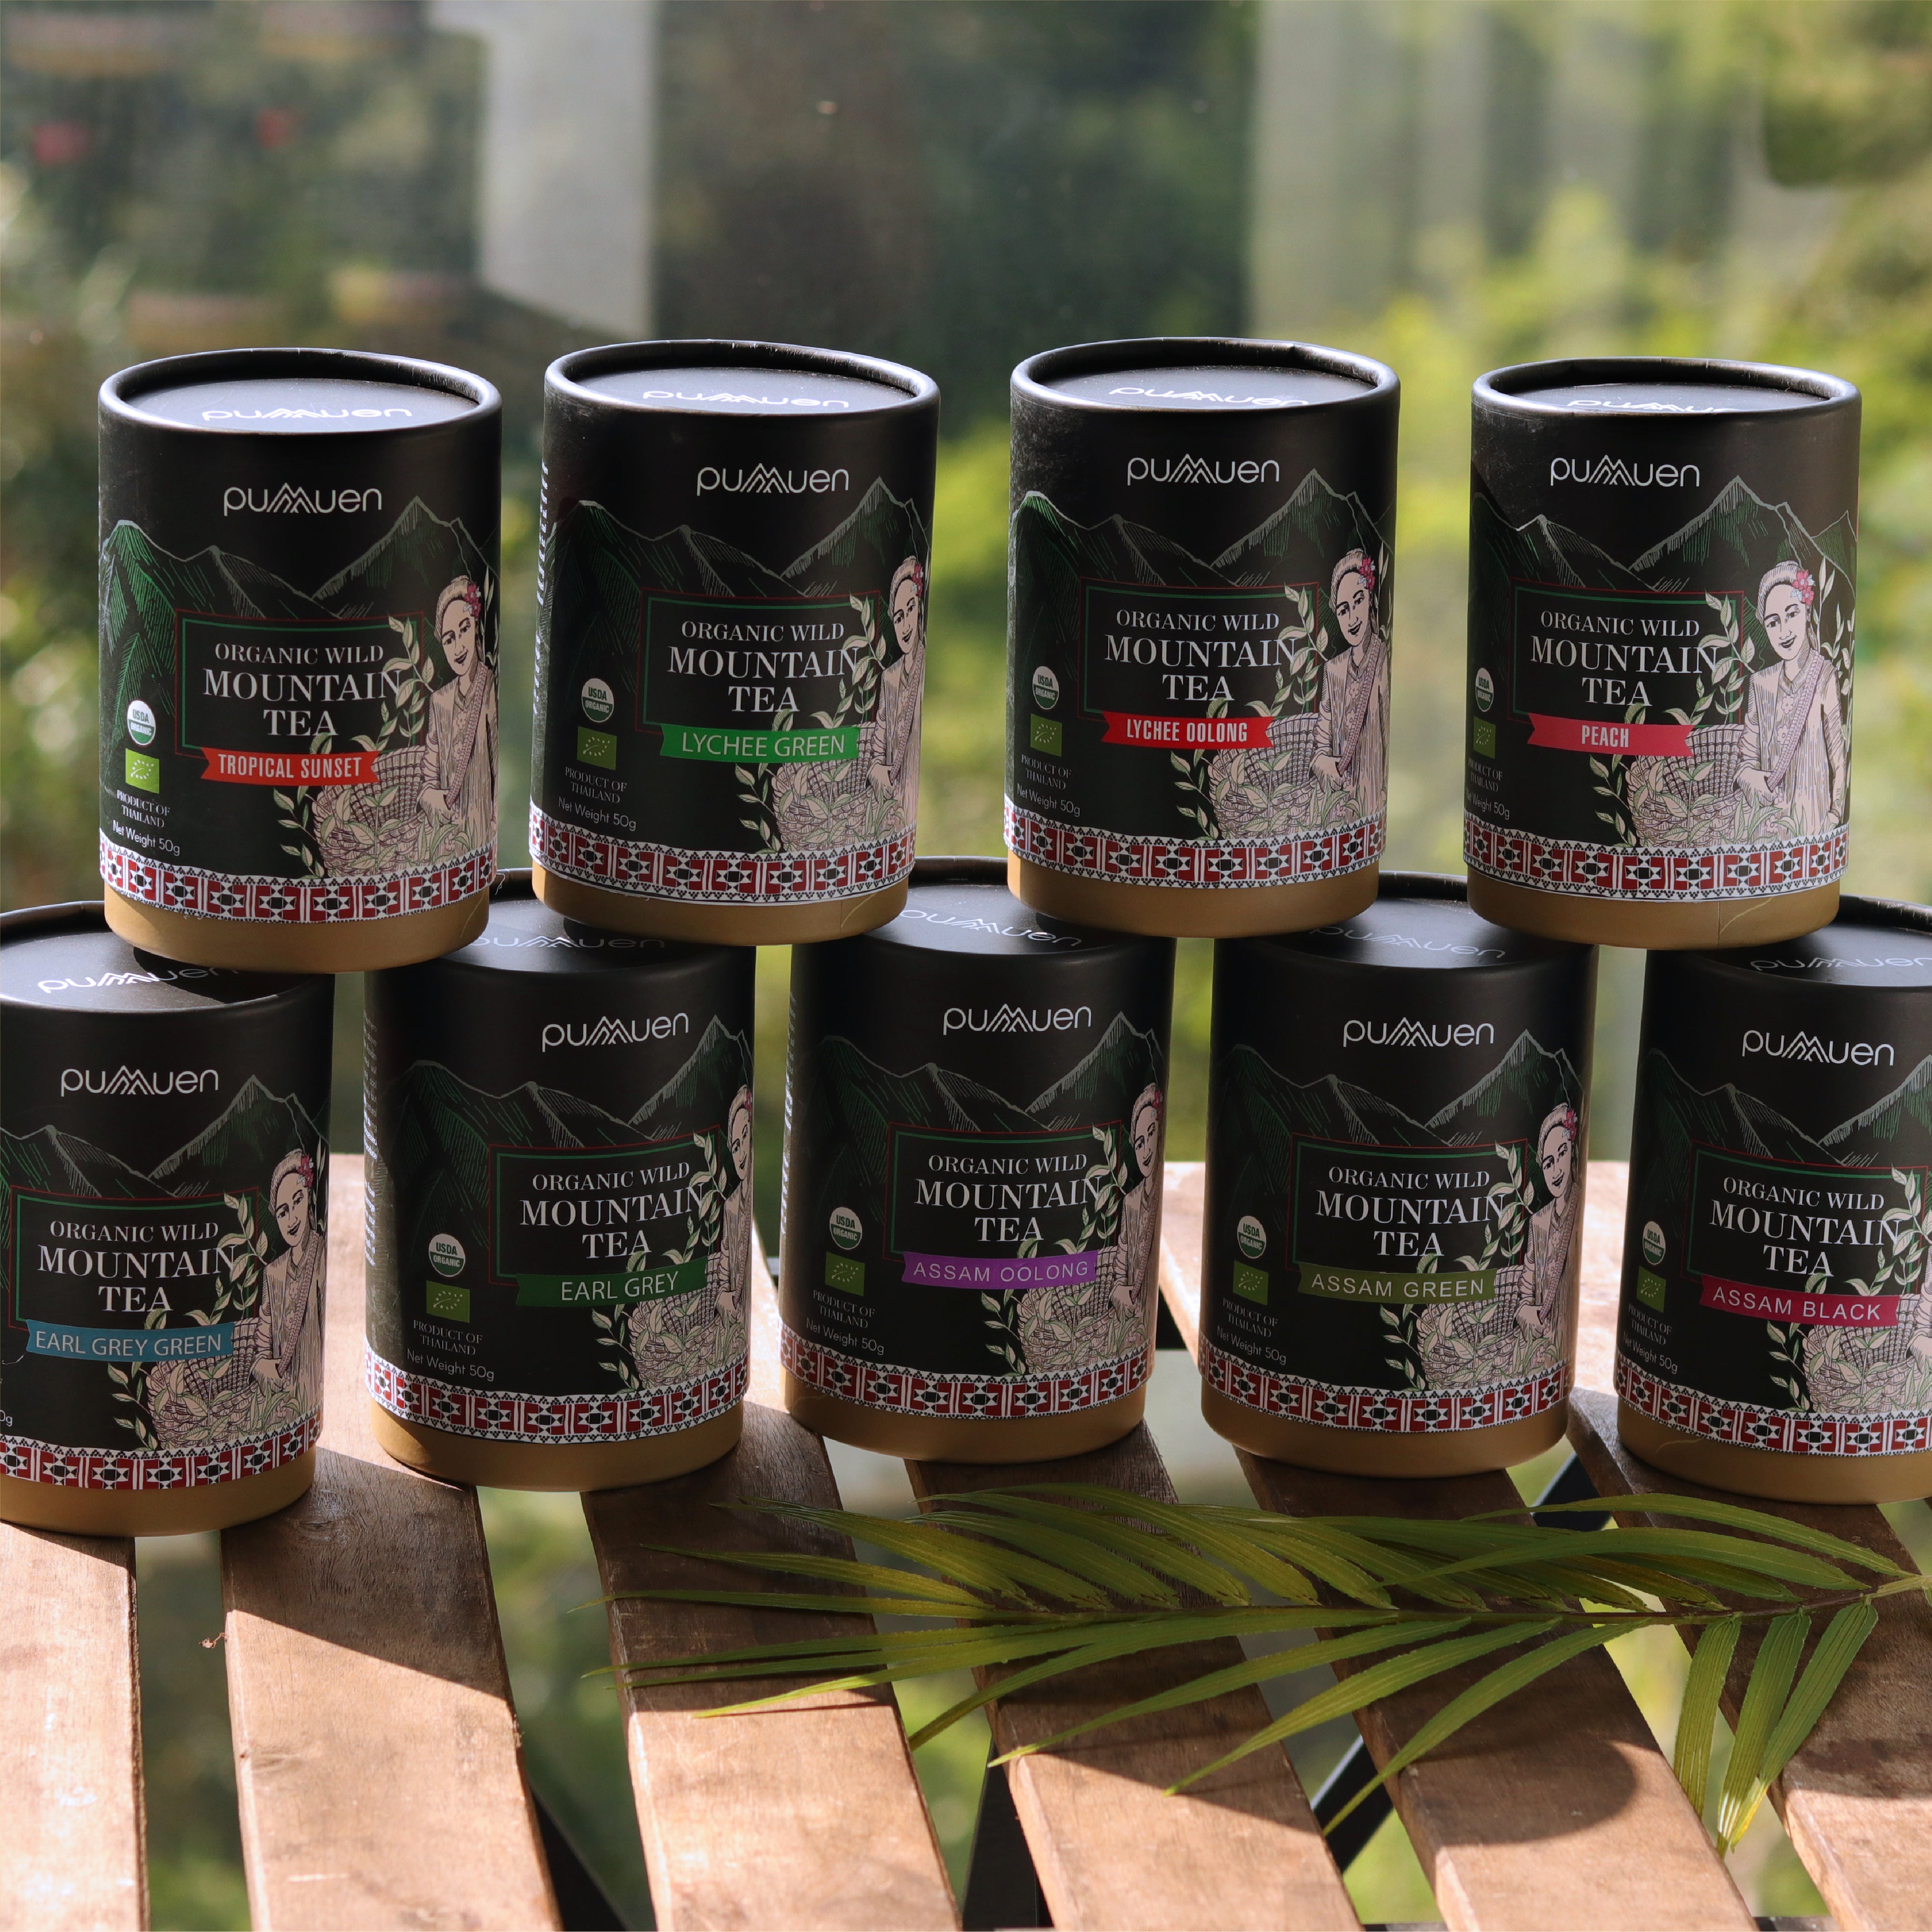 Pumuen organic wild grow mountain tea - Lychee Oolong